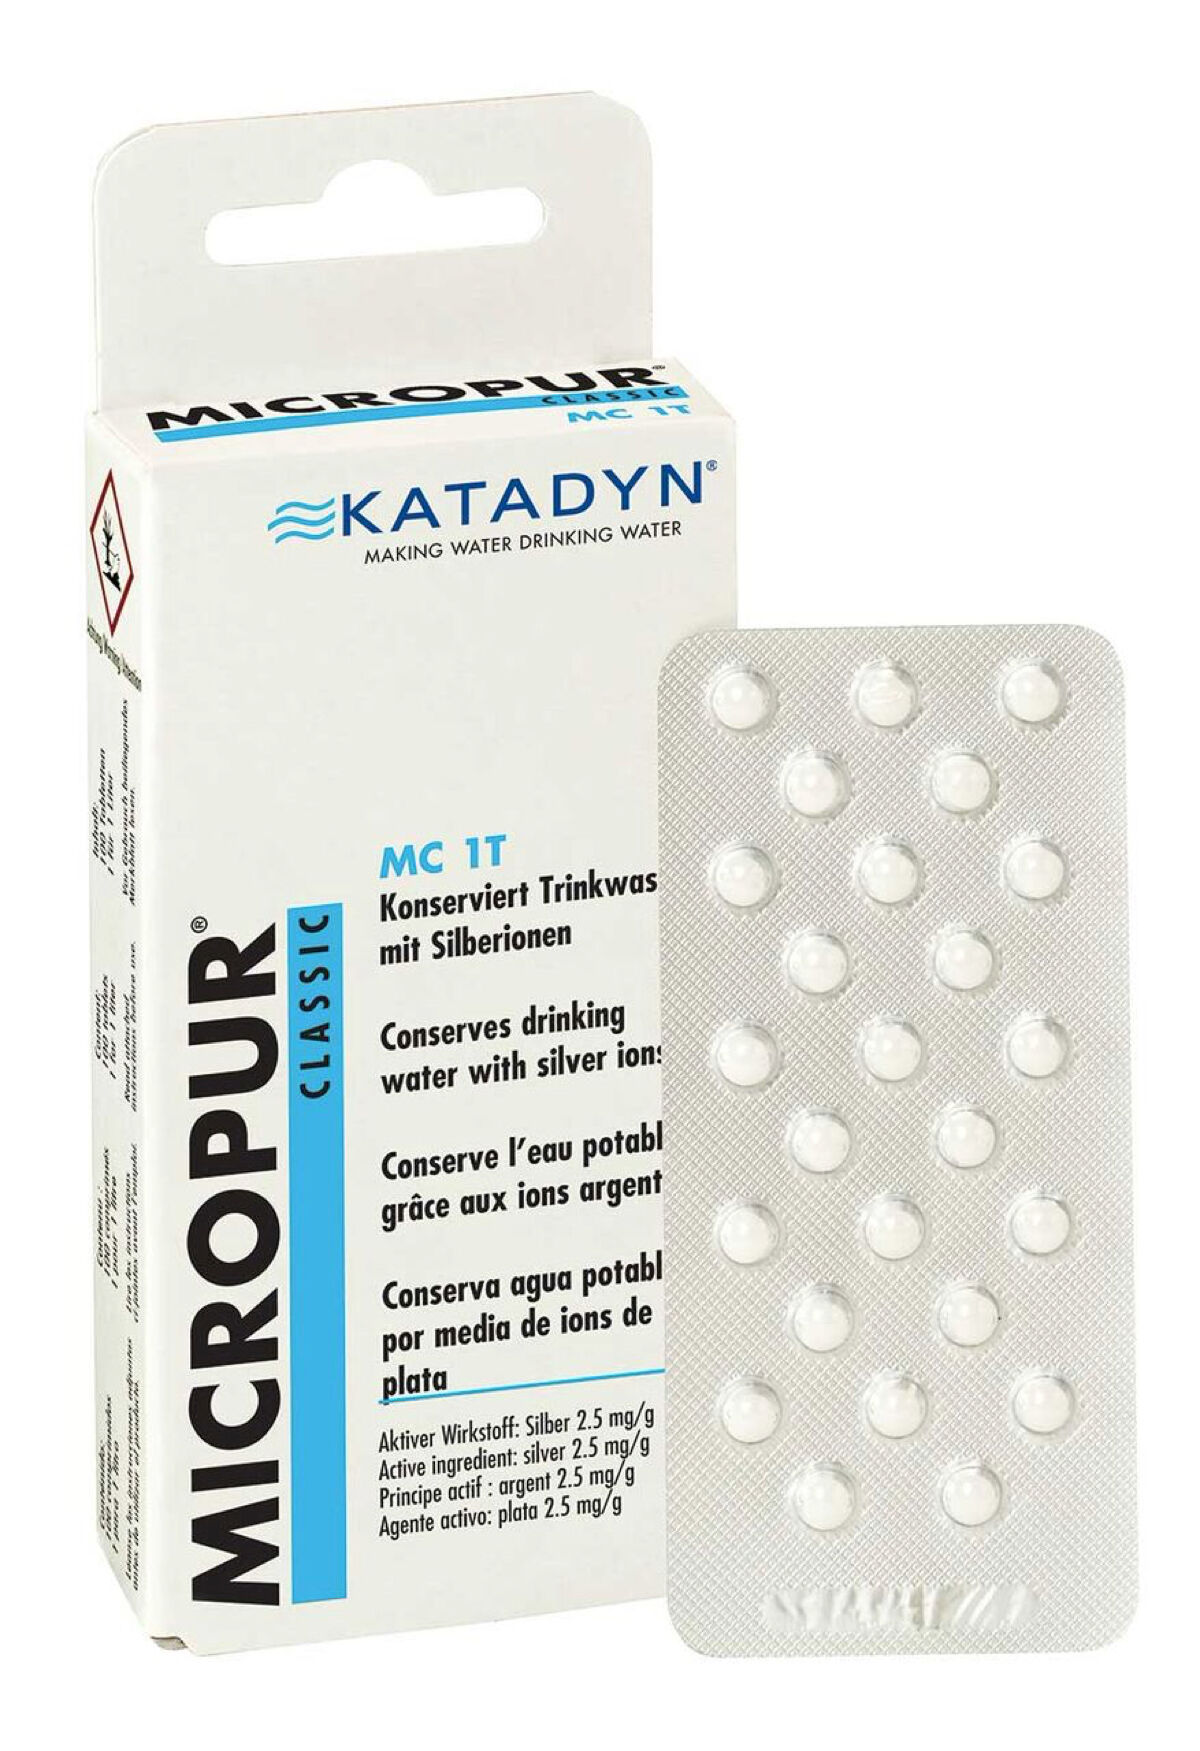 Katadyn Micropur Classic MC 1T (100) - Vattenfilter